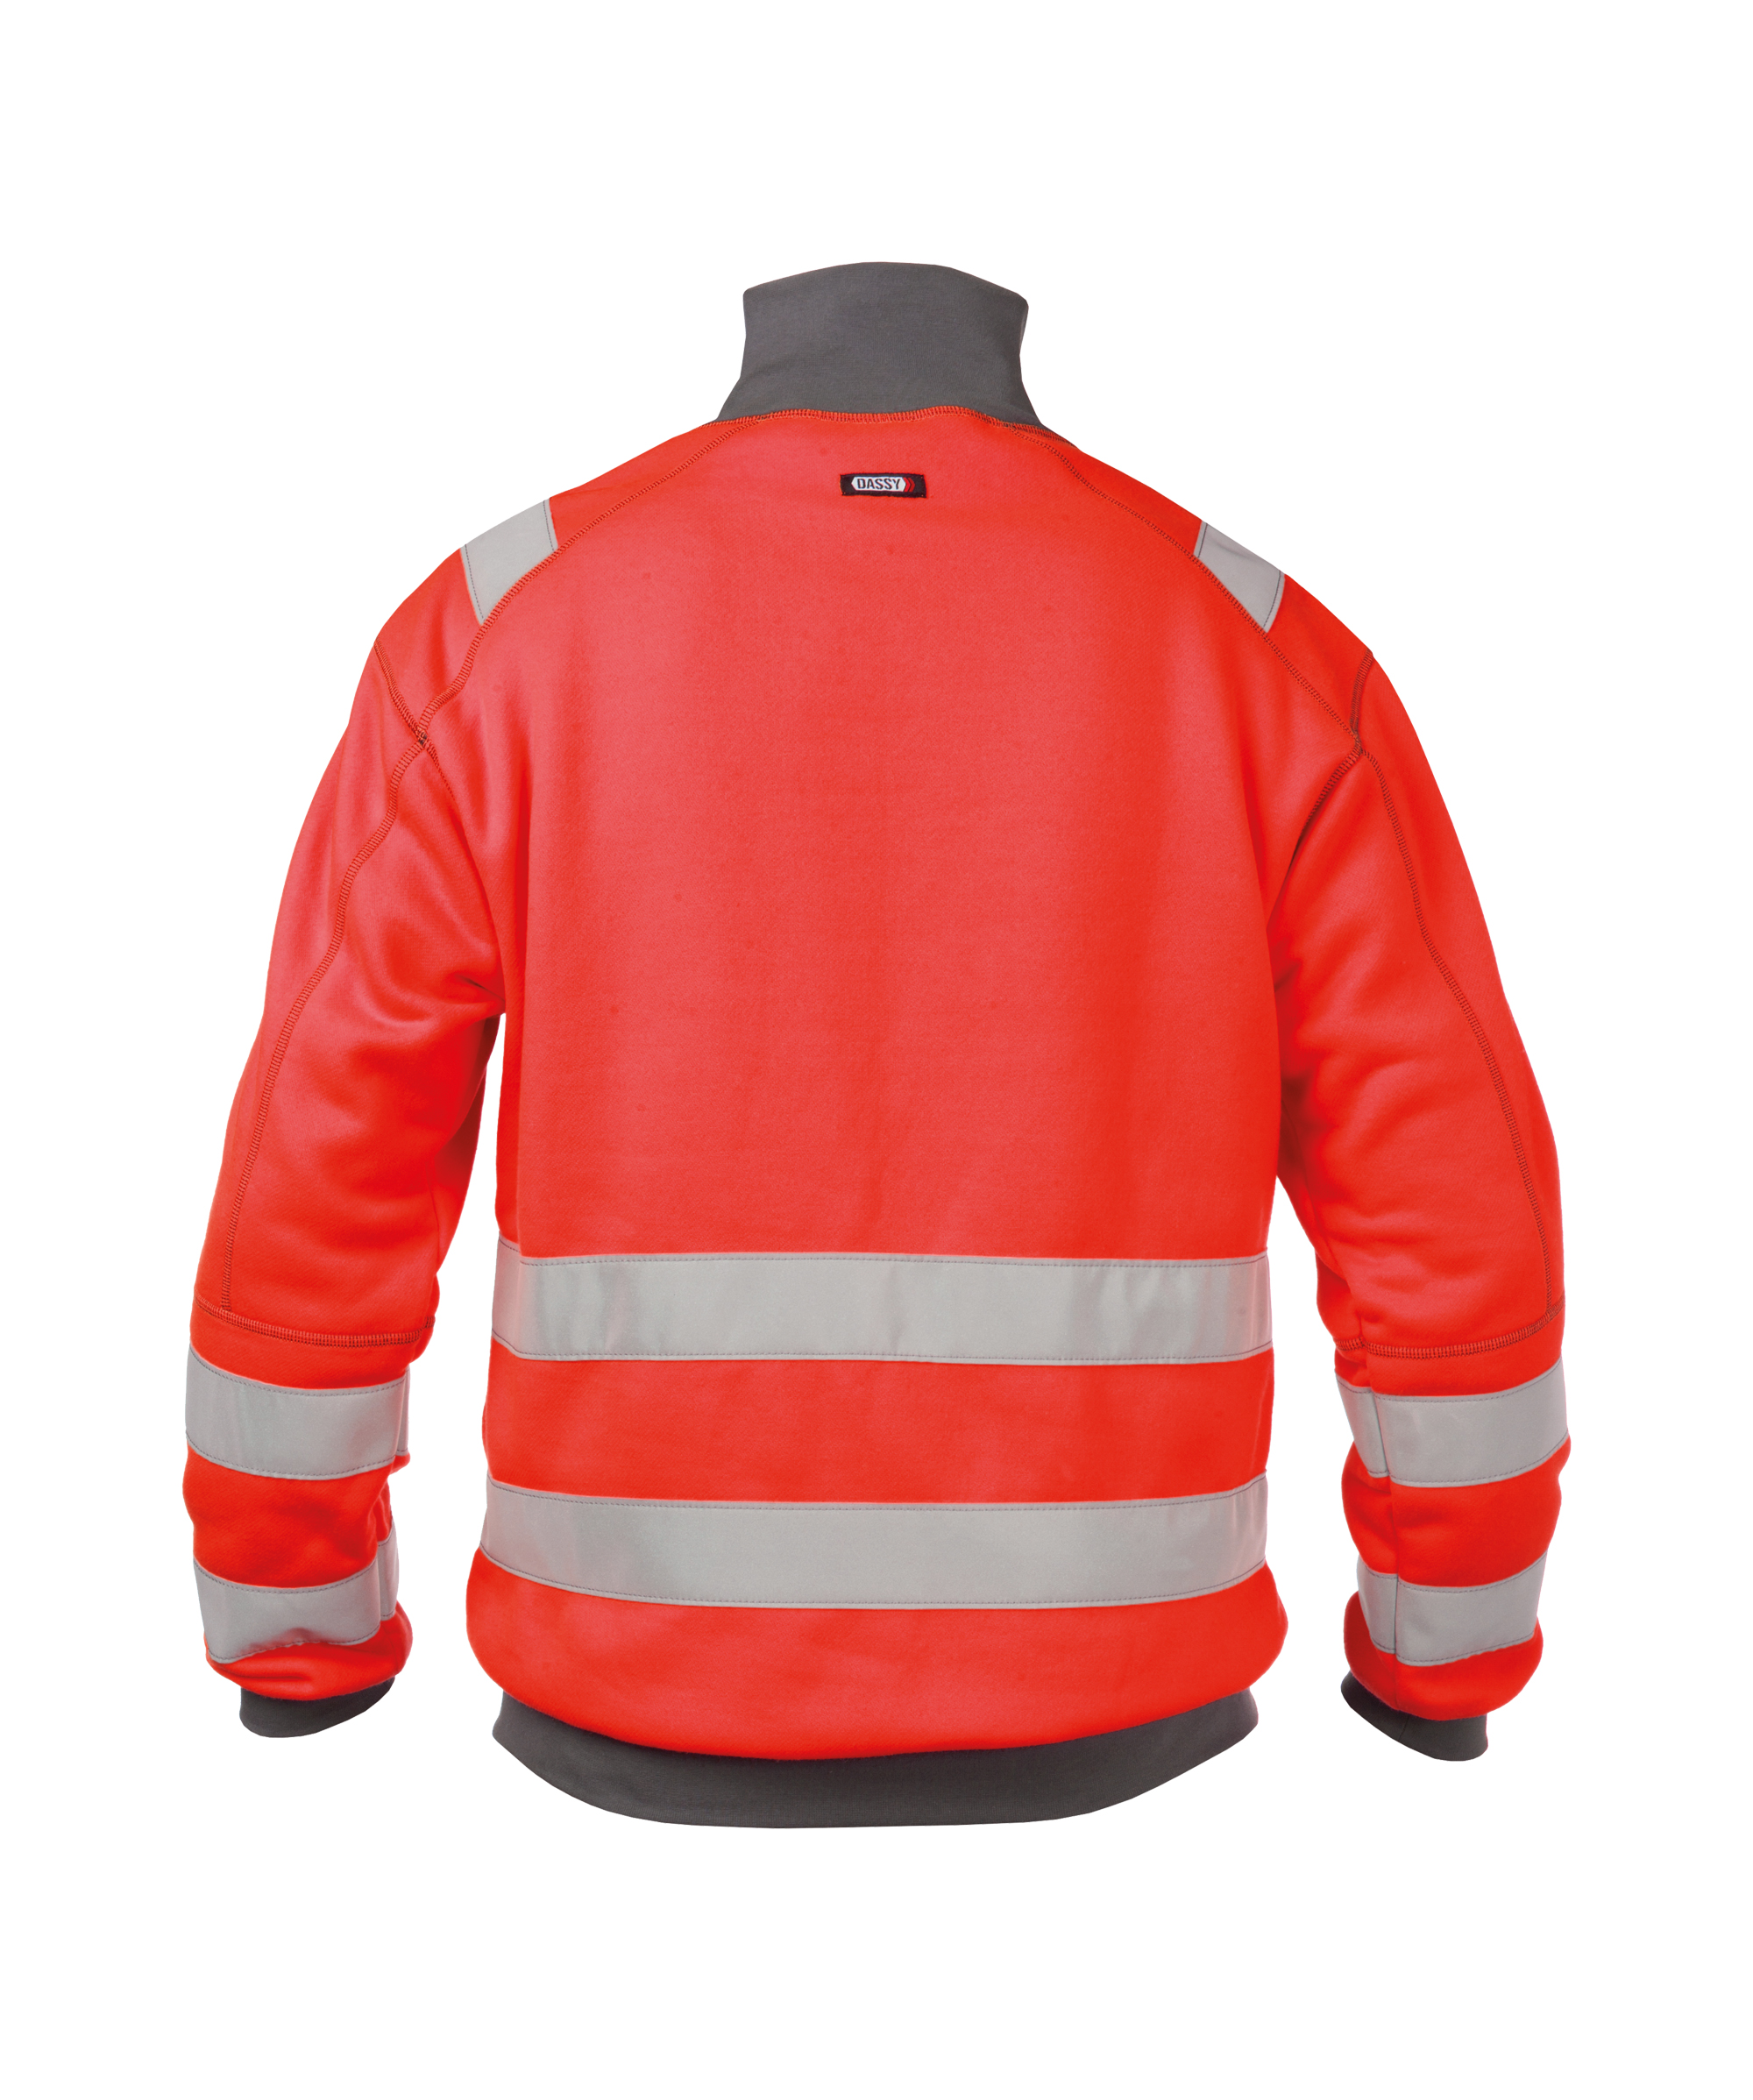 denver_high-visibility-sweatshirt_fluo-red-cement-grey_back.jpg